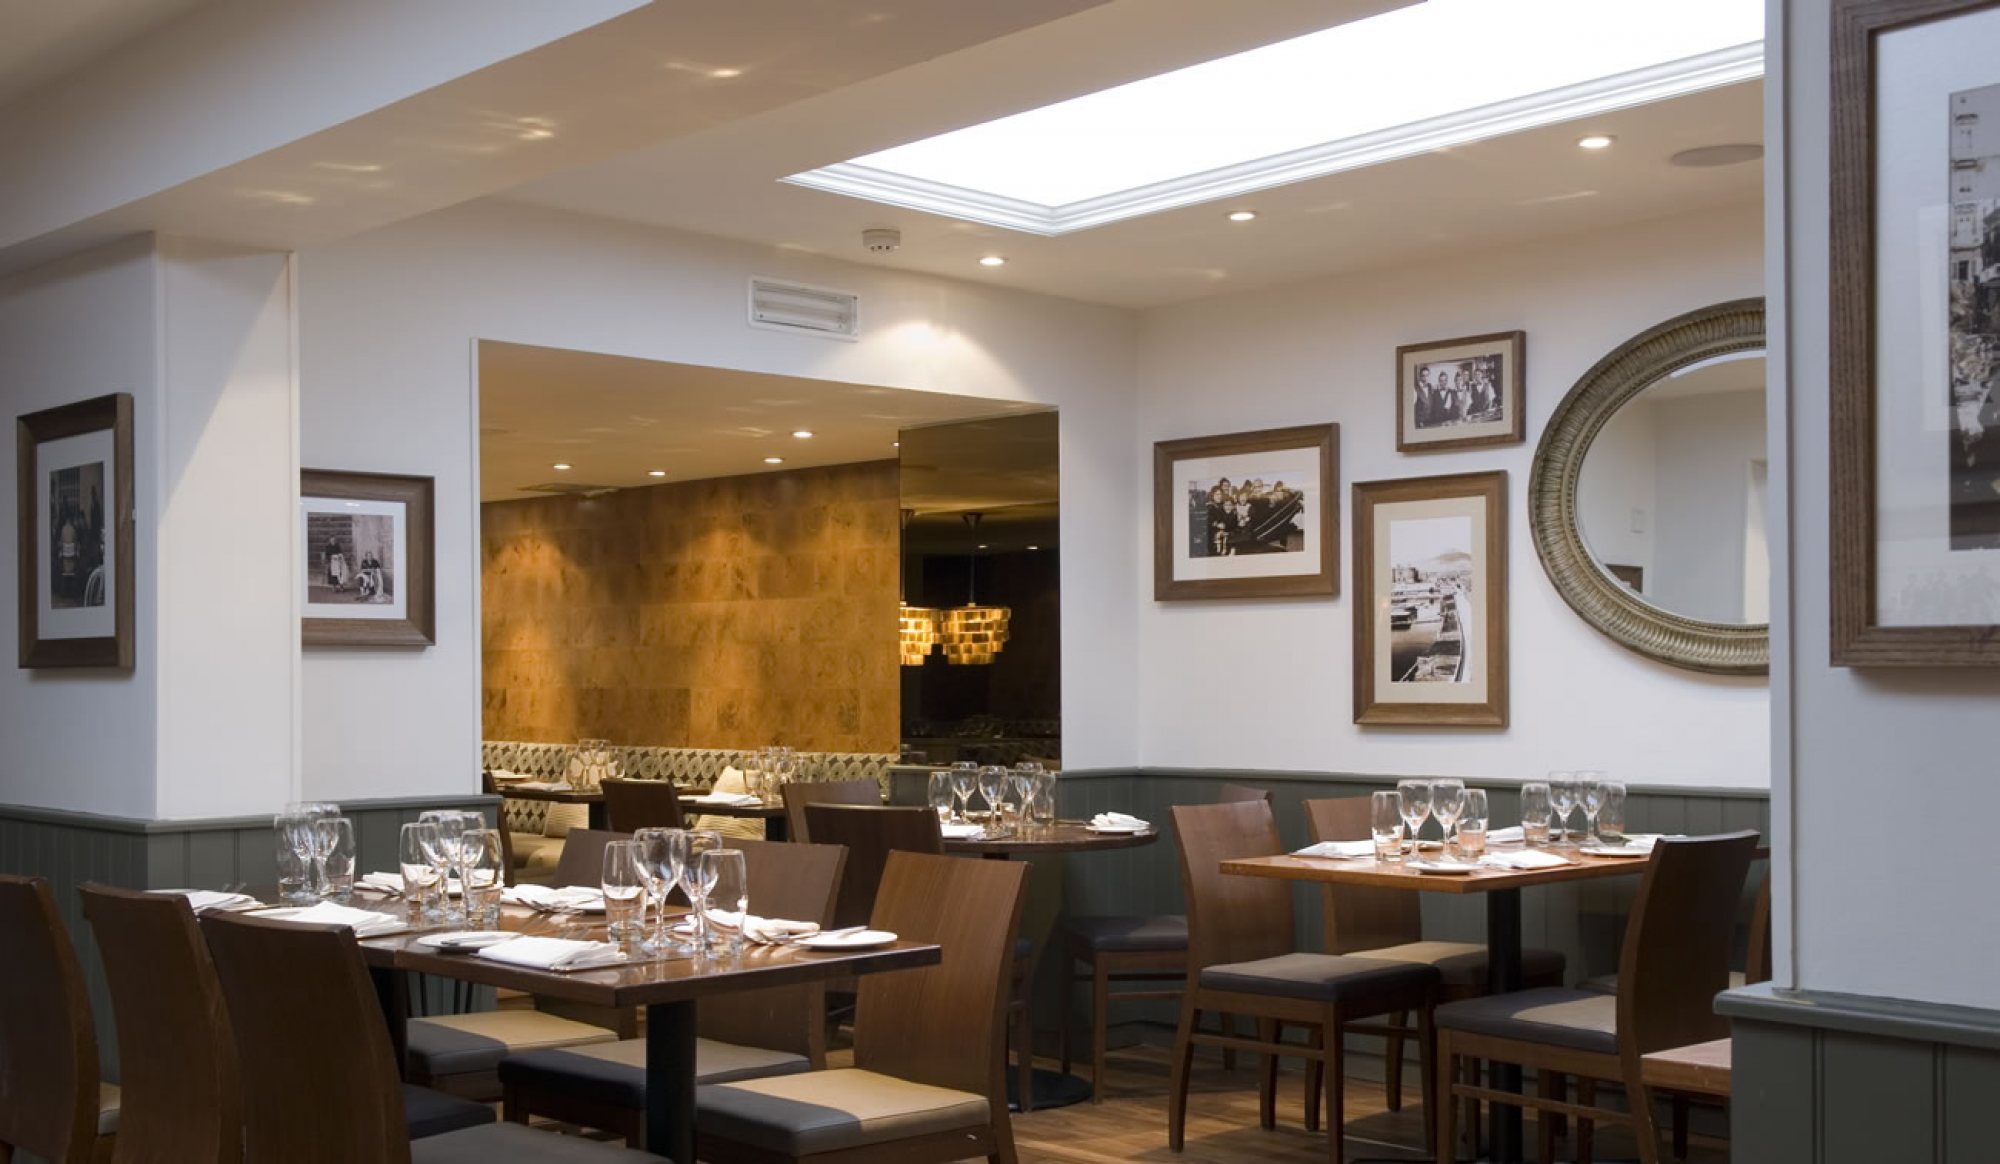 Ferraris Bexley Restaurants has long been established as the Best Restaurant Bexleyheath. Among family restaurants in south east London italian inspired